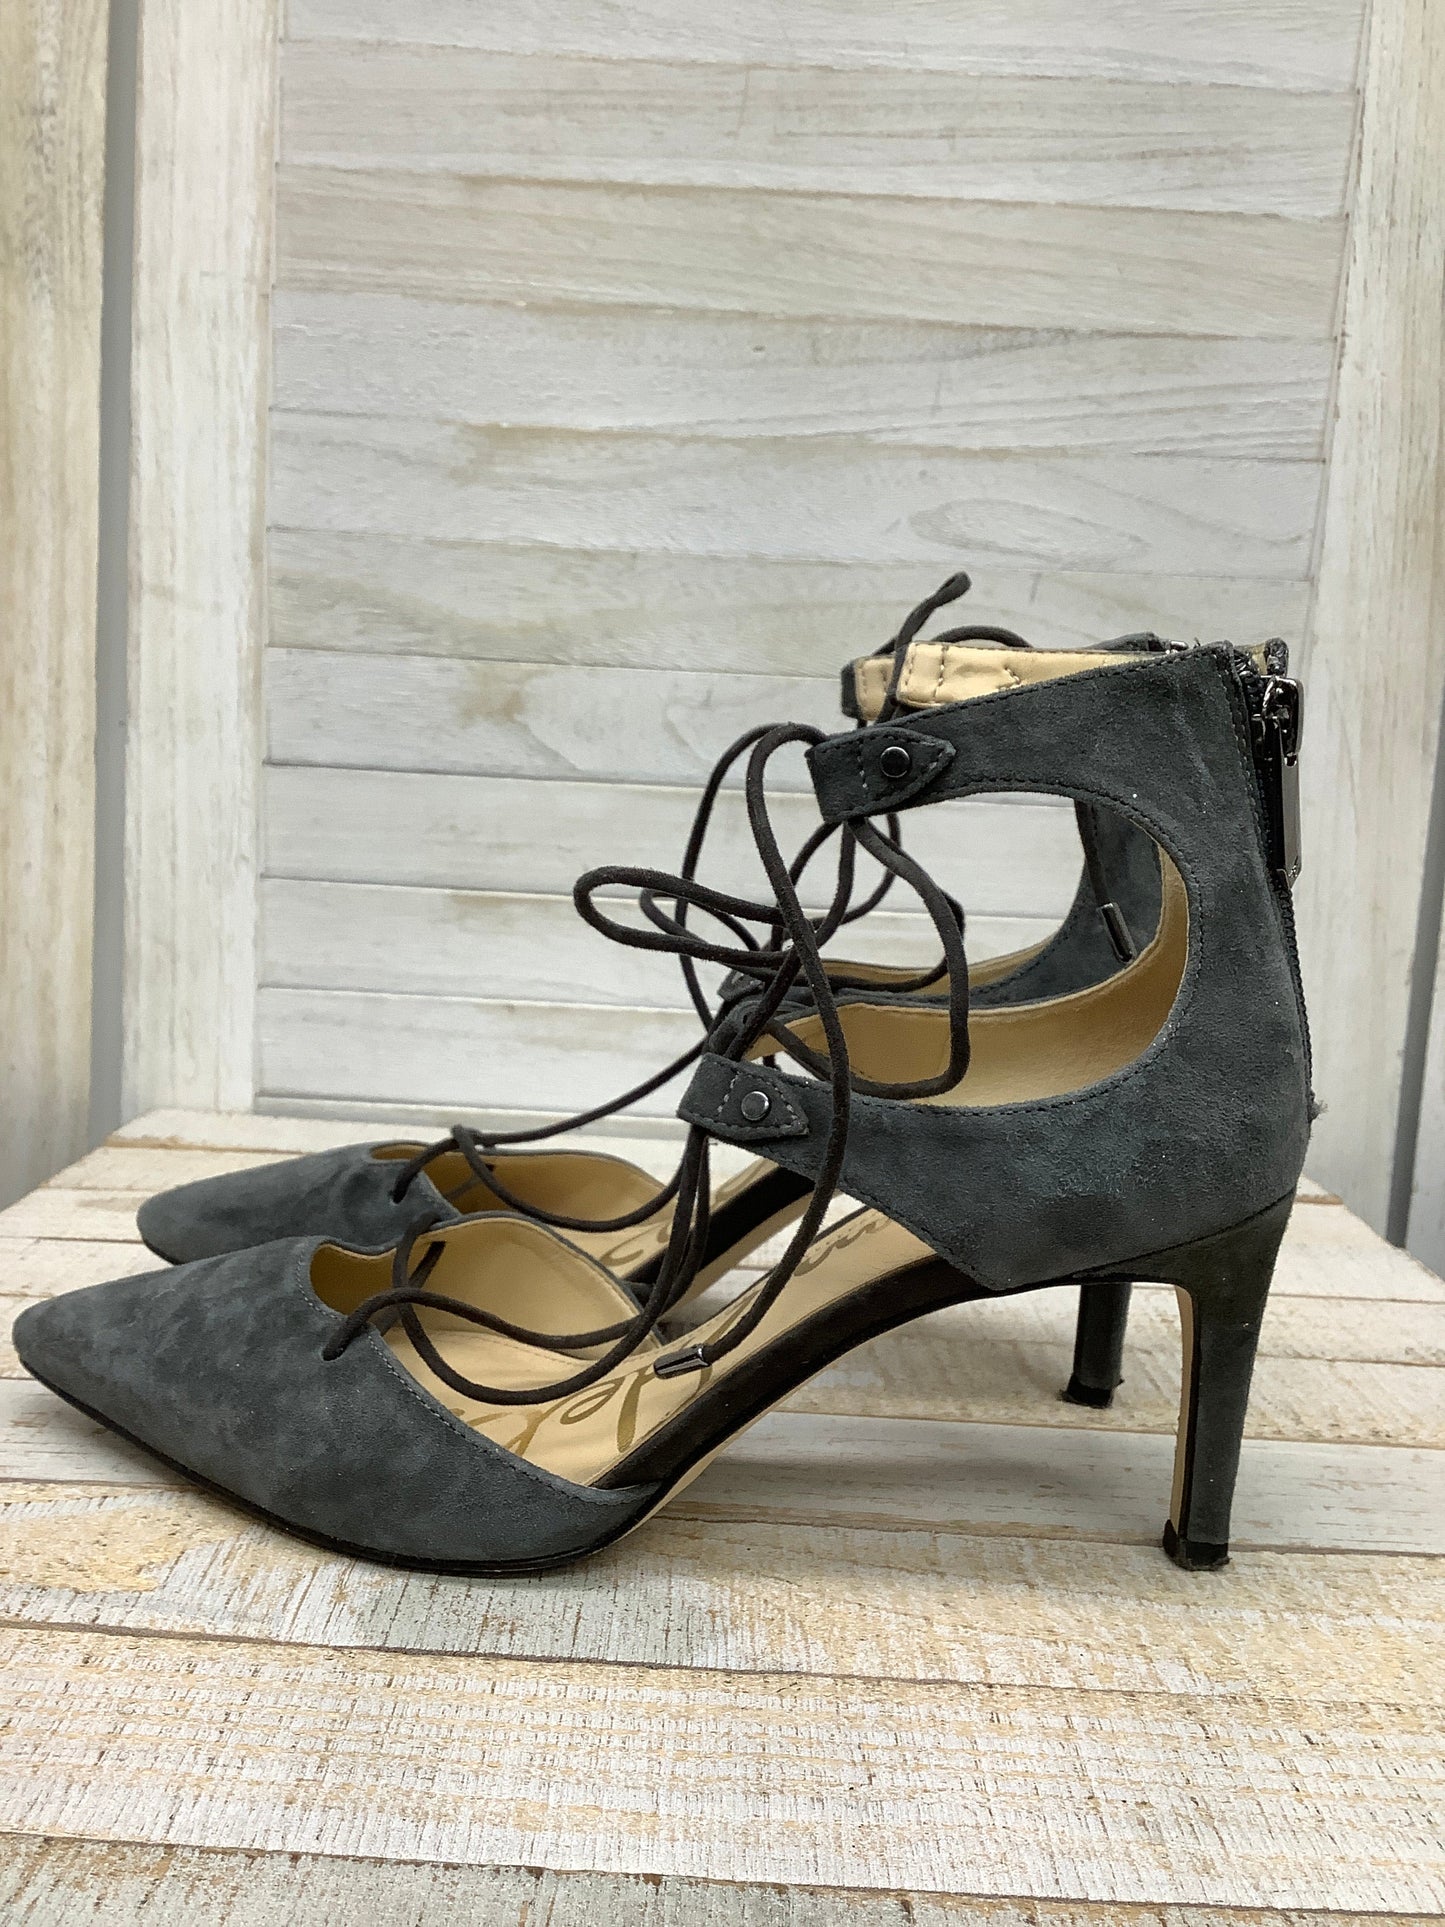 Shoes Heels Stiletto By Sam Edelman  Size: 6.5